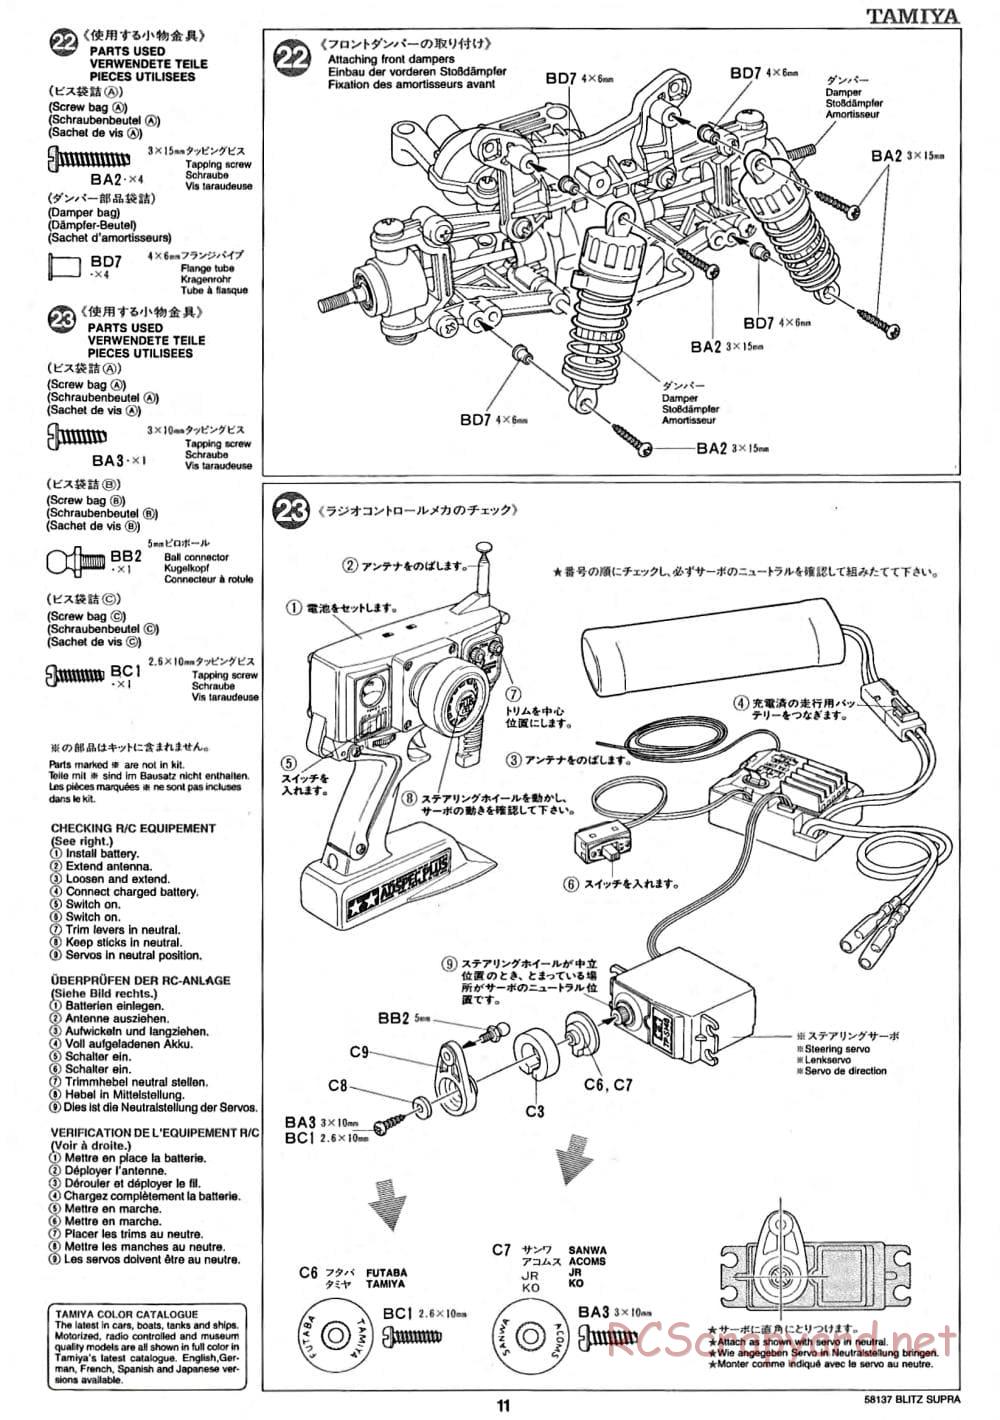 Tamiya - Blitz Toyota Supra Gr.N - TA-02 Chassis - Manual - Page 11